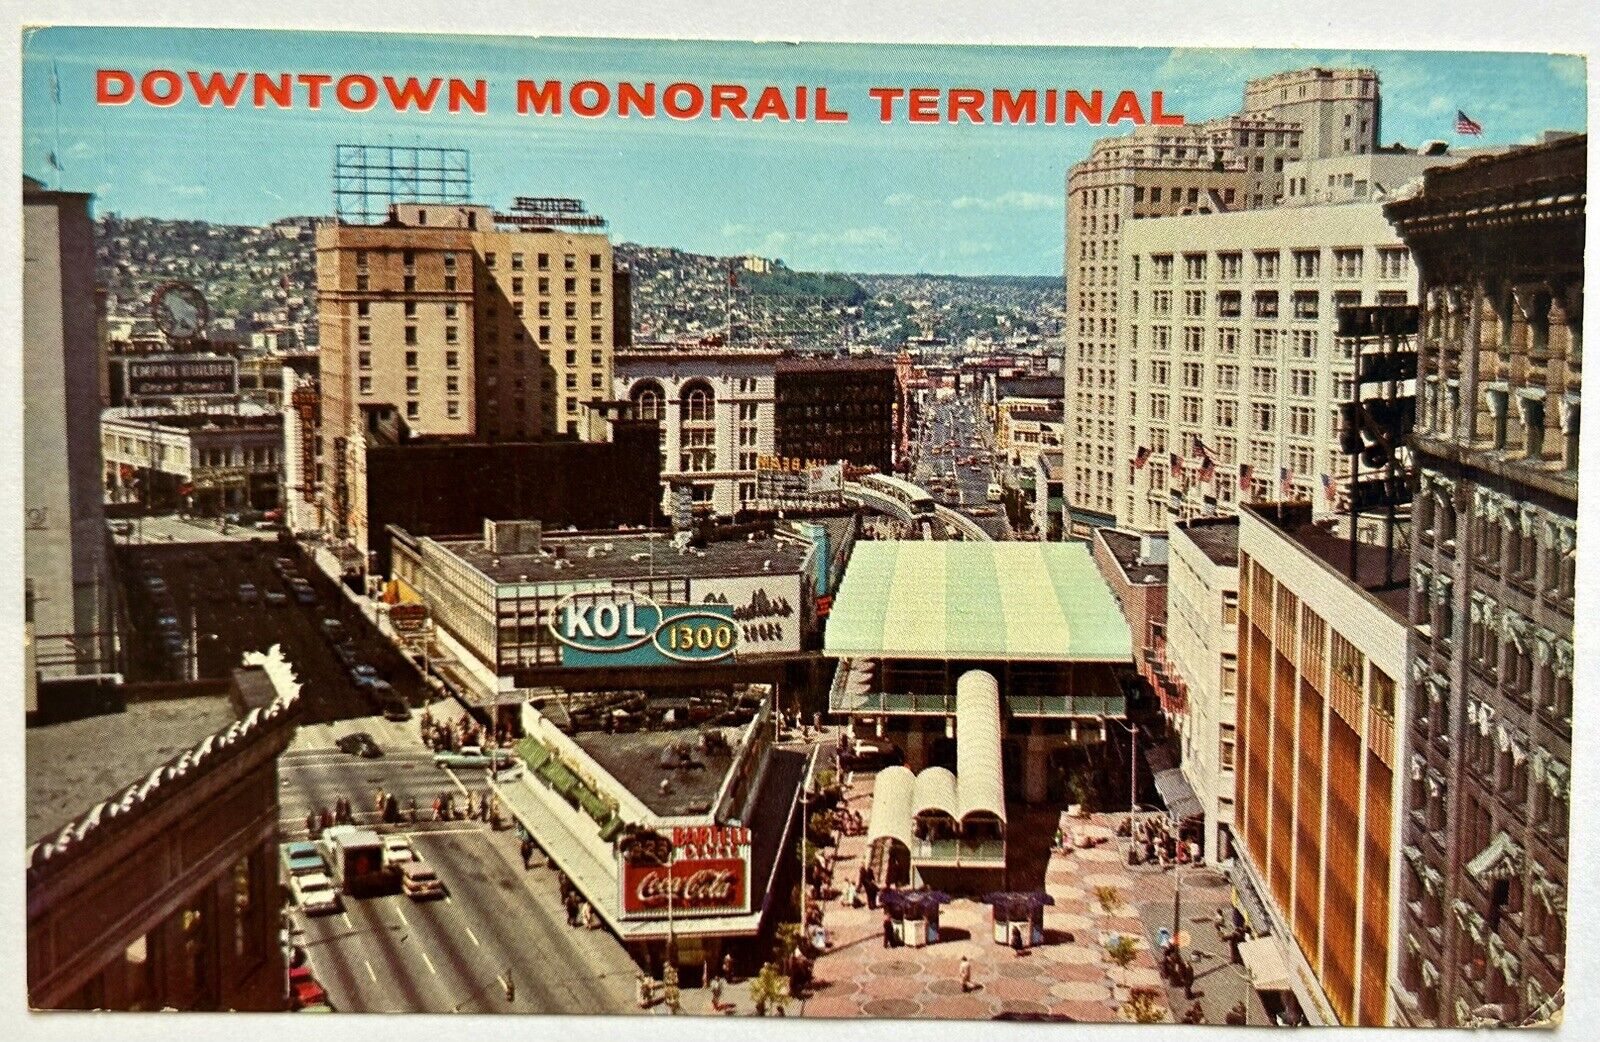 Downtown monorail terminal Vintage Postcard. Seattle, Washington. 1962